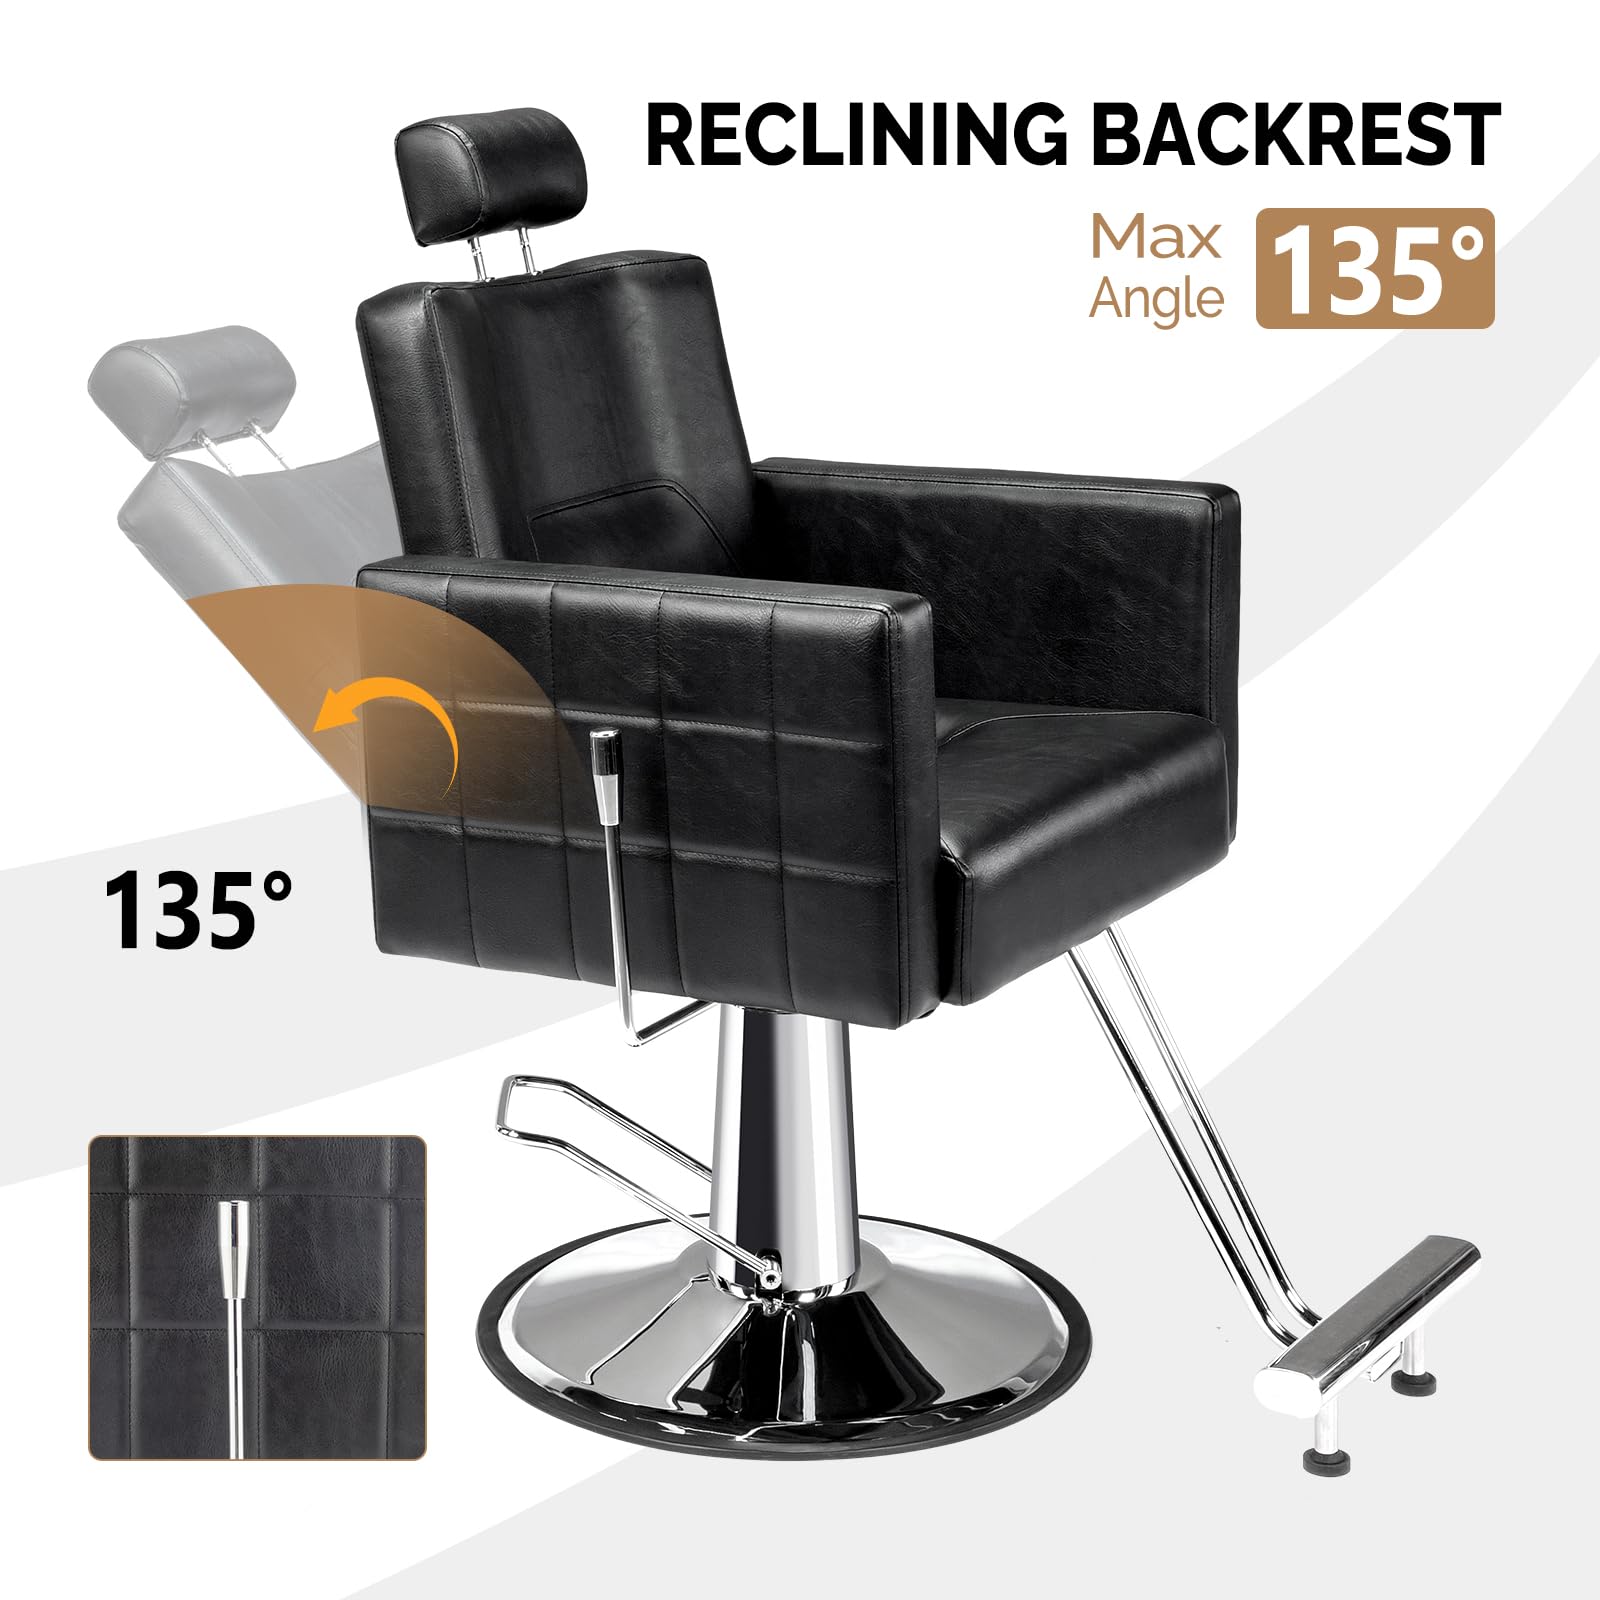 OmySalon All Purpose Heavy Duty Hydraulic Reclining Barber Chair 360 Degree Swivel Salon Chair Black/Camel